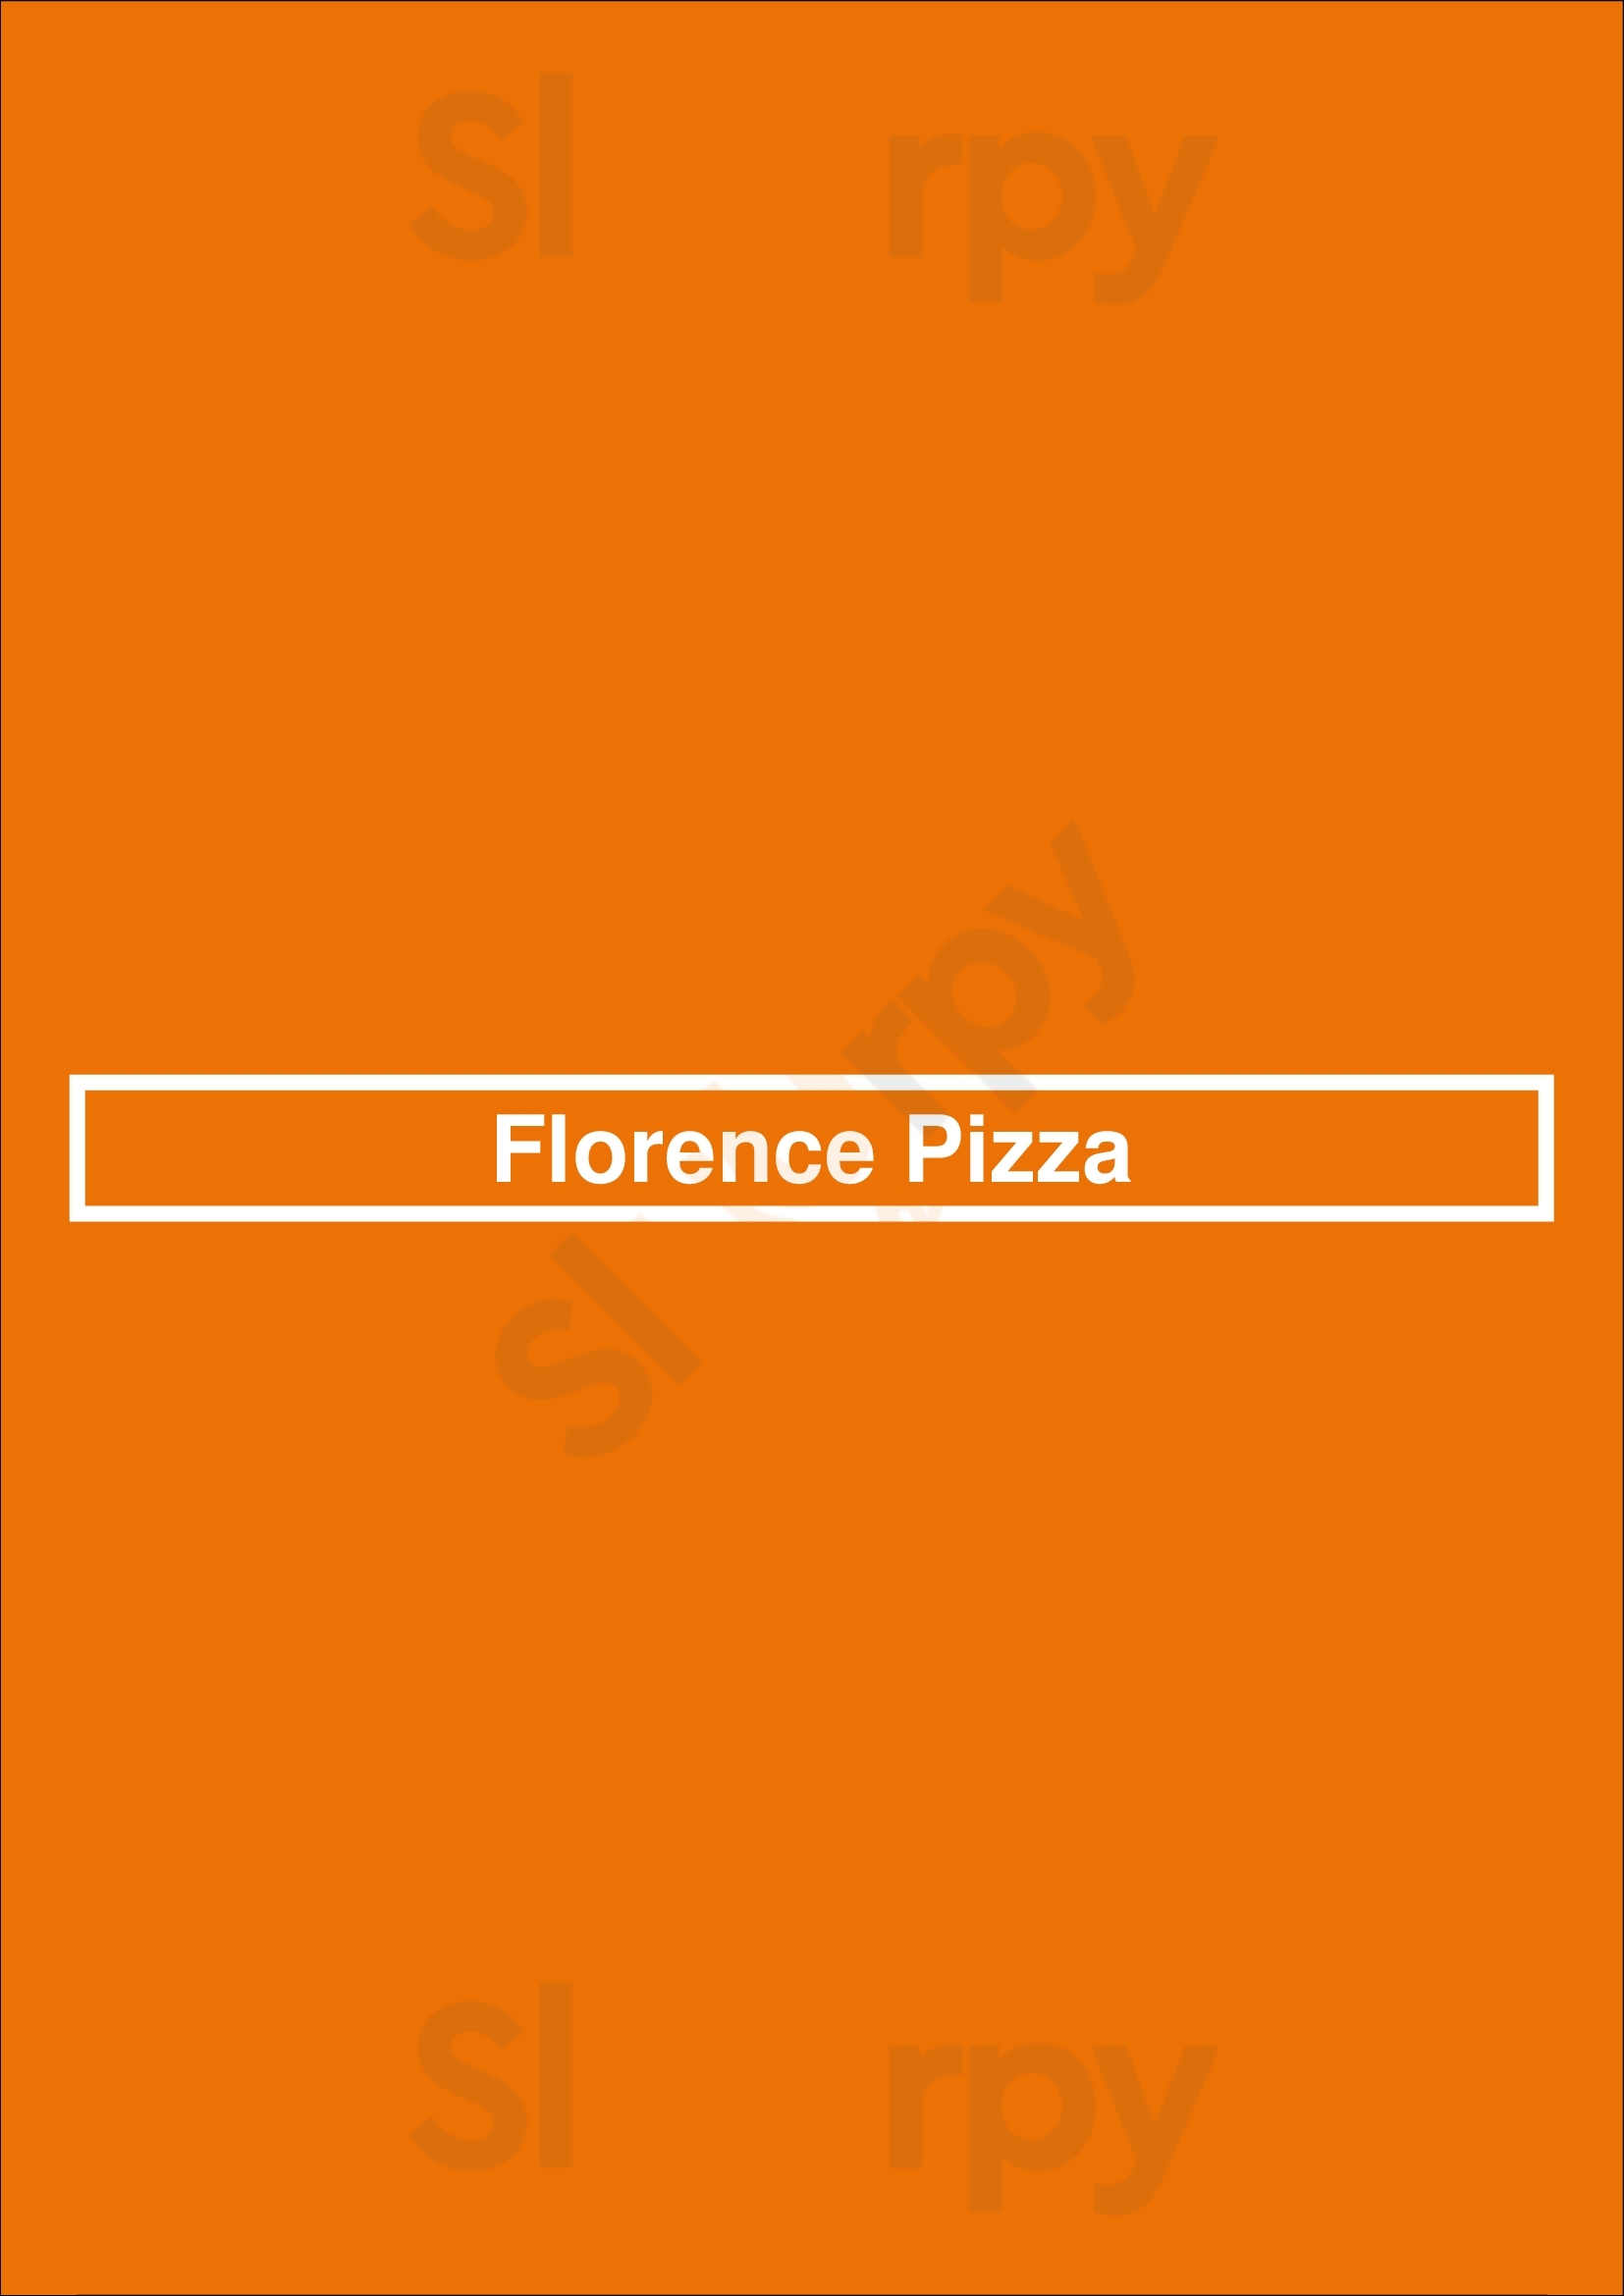 Florence Pizza Vancouver Menu - 1